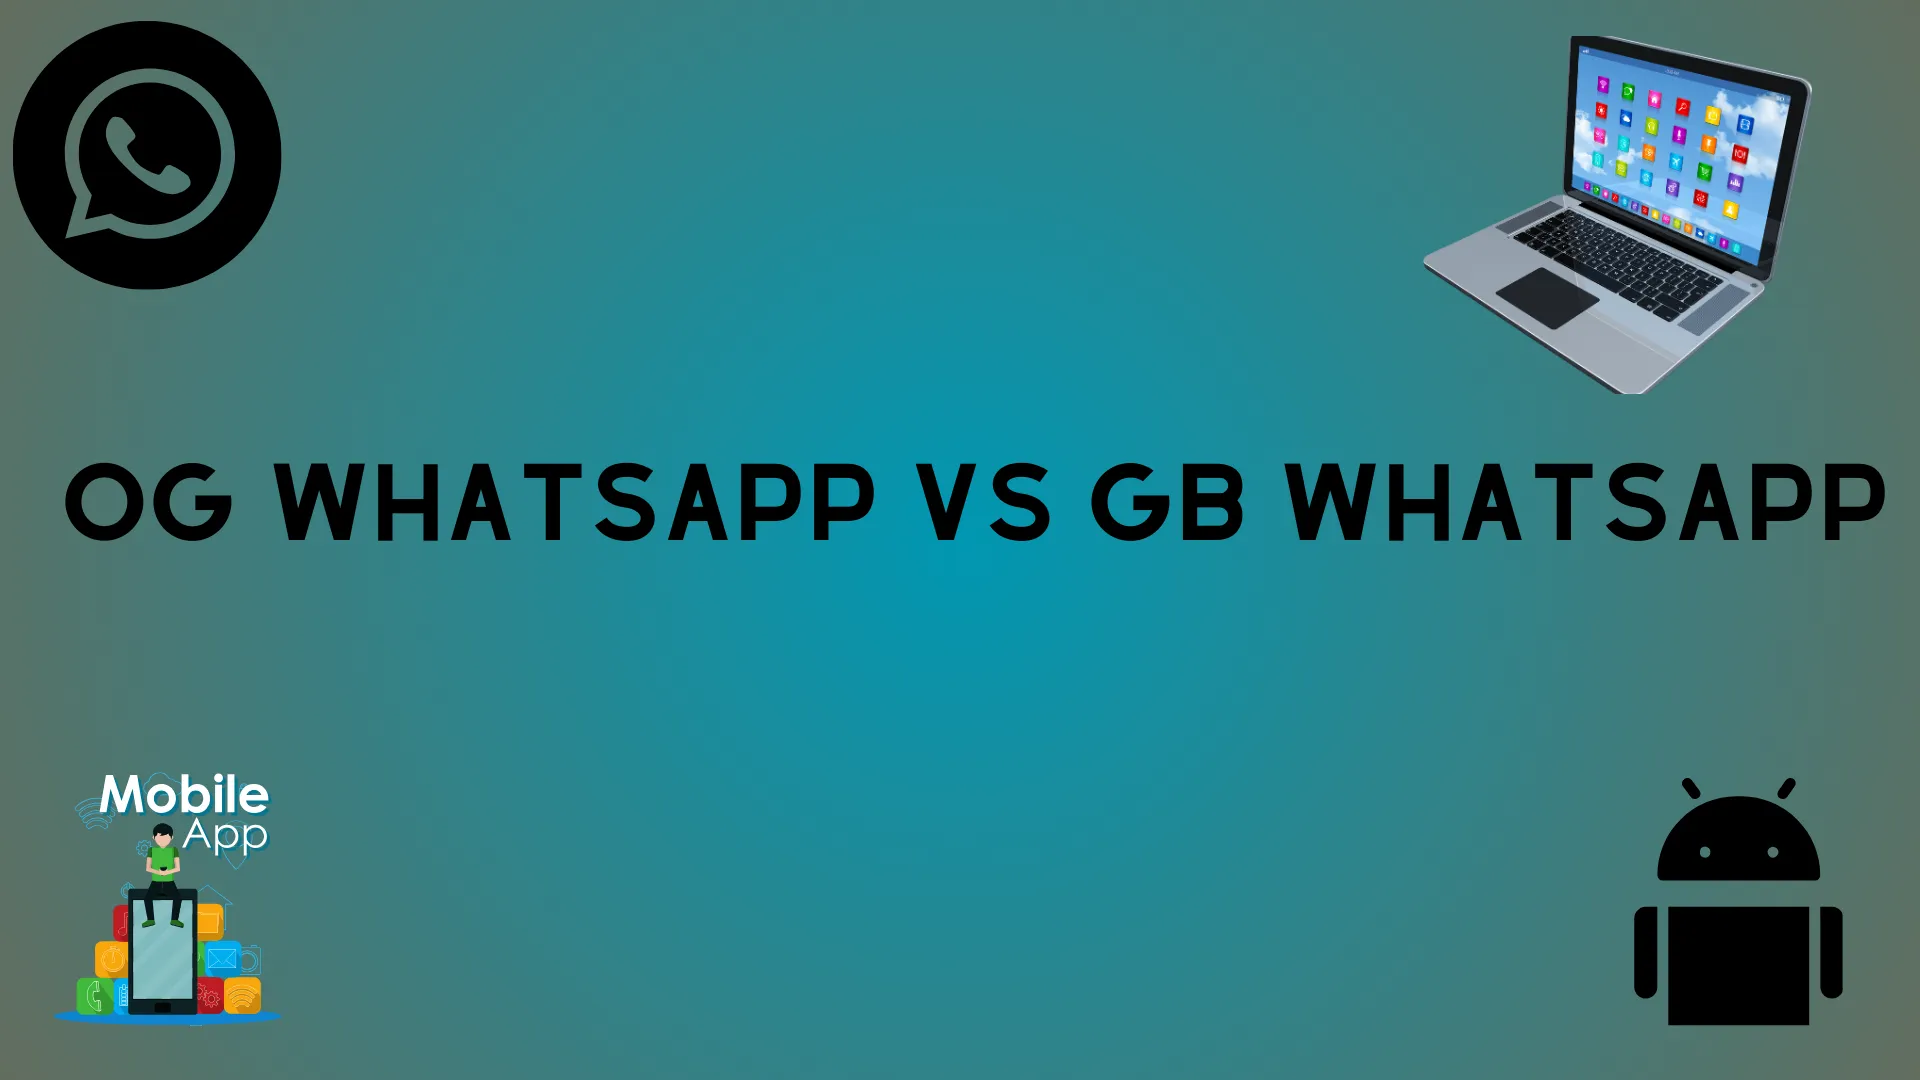 OG WhatsApp vs GB WhatsApp infographic